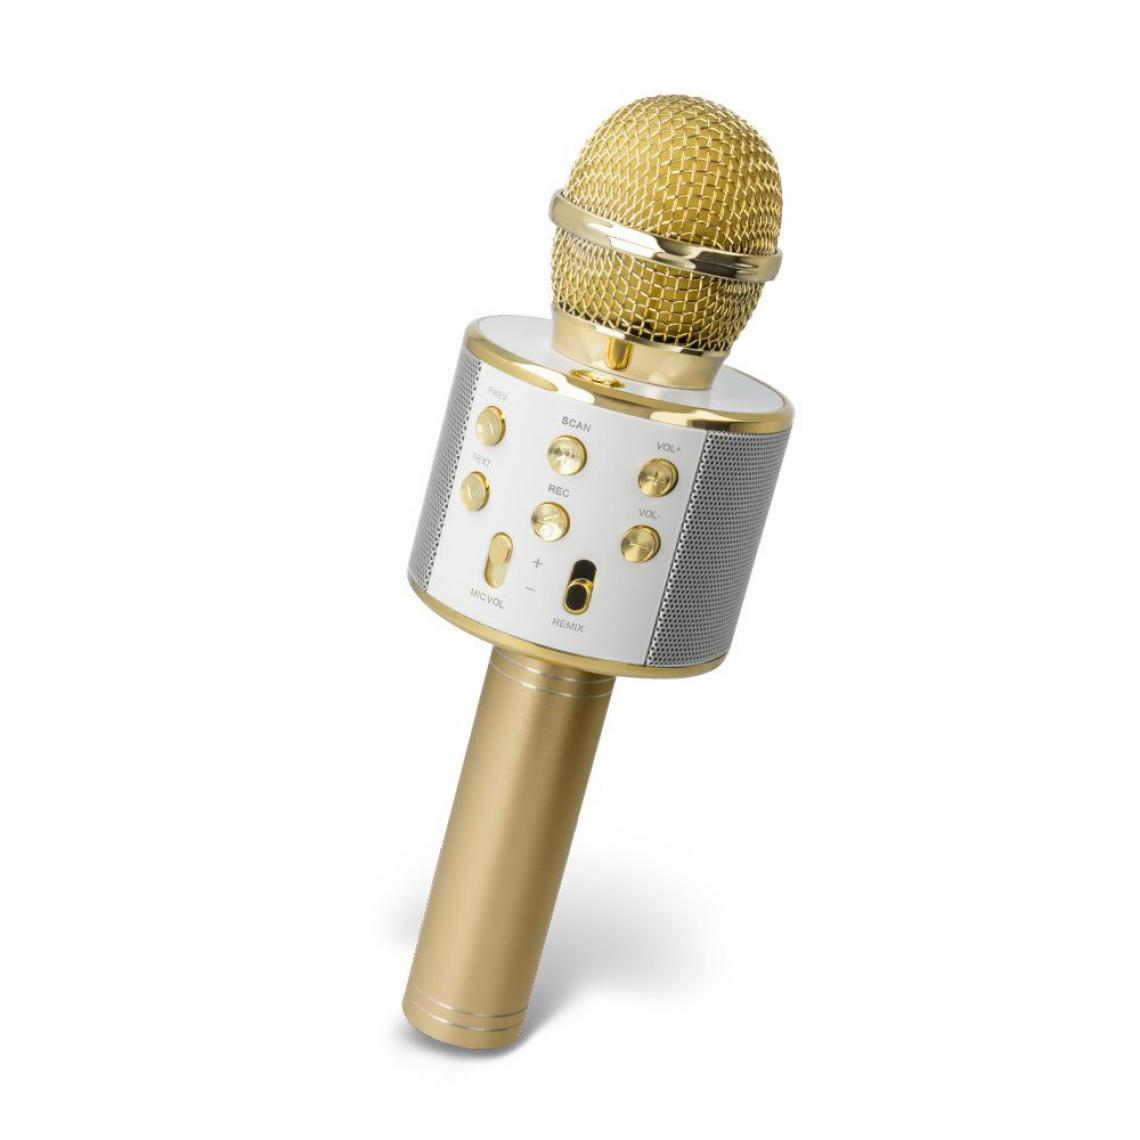 Ozzzo - Microphone Karaoke bluetooth haut parleur ozzzo Gold Or pour Oppo A73 2020 - Autres accessoires smartphone